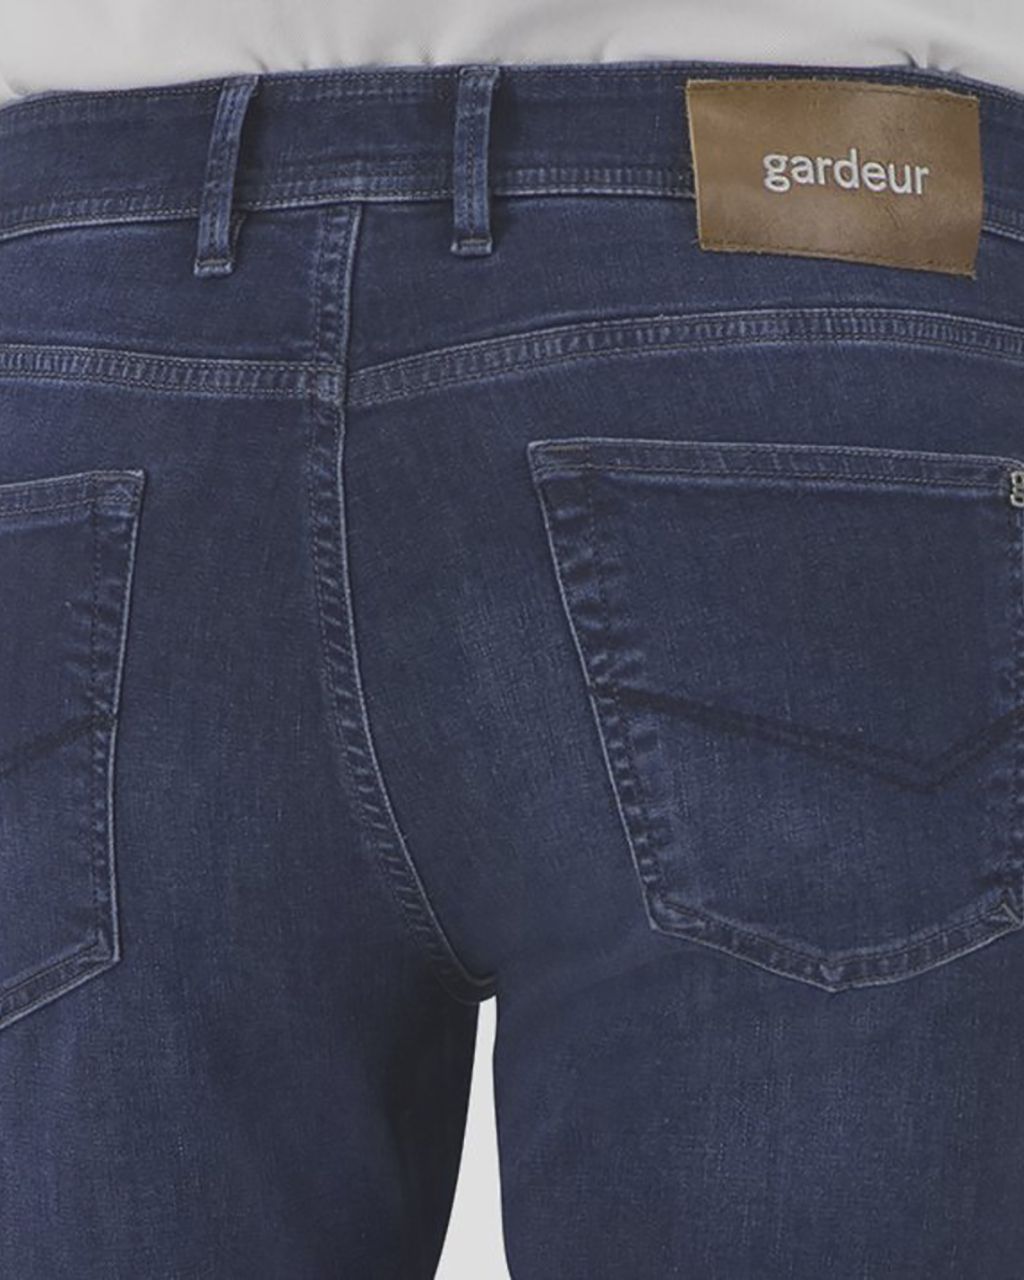 Gardeur Bradley Jeans Blauw 075702-001-31/32